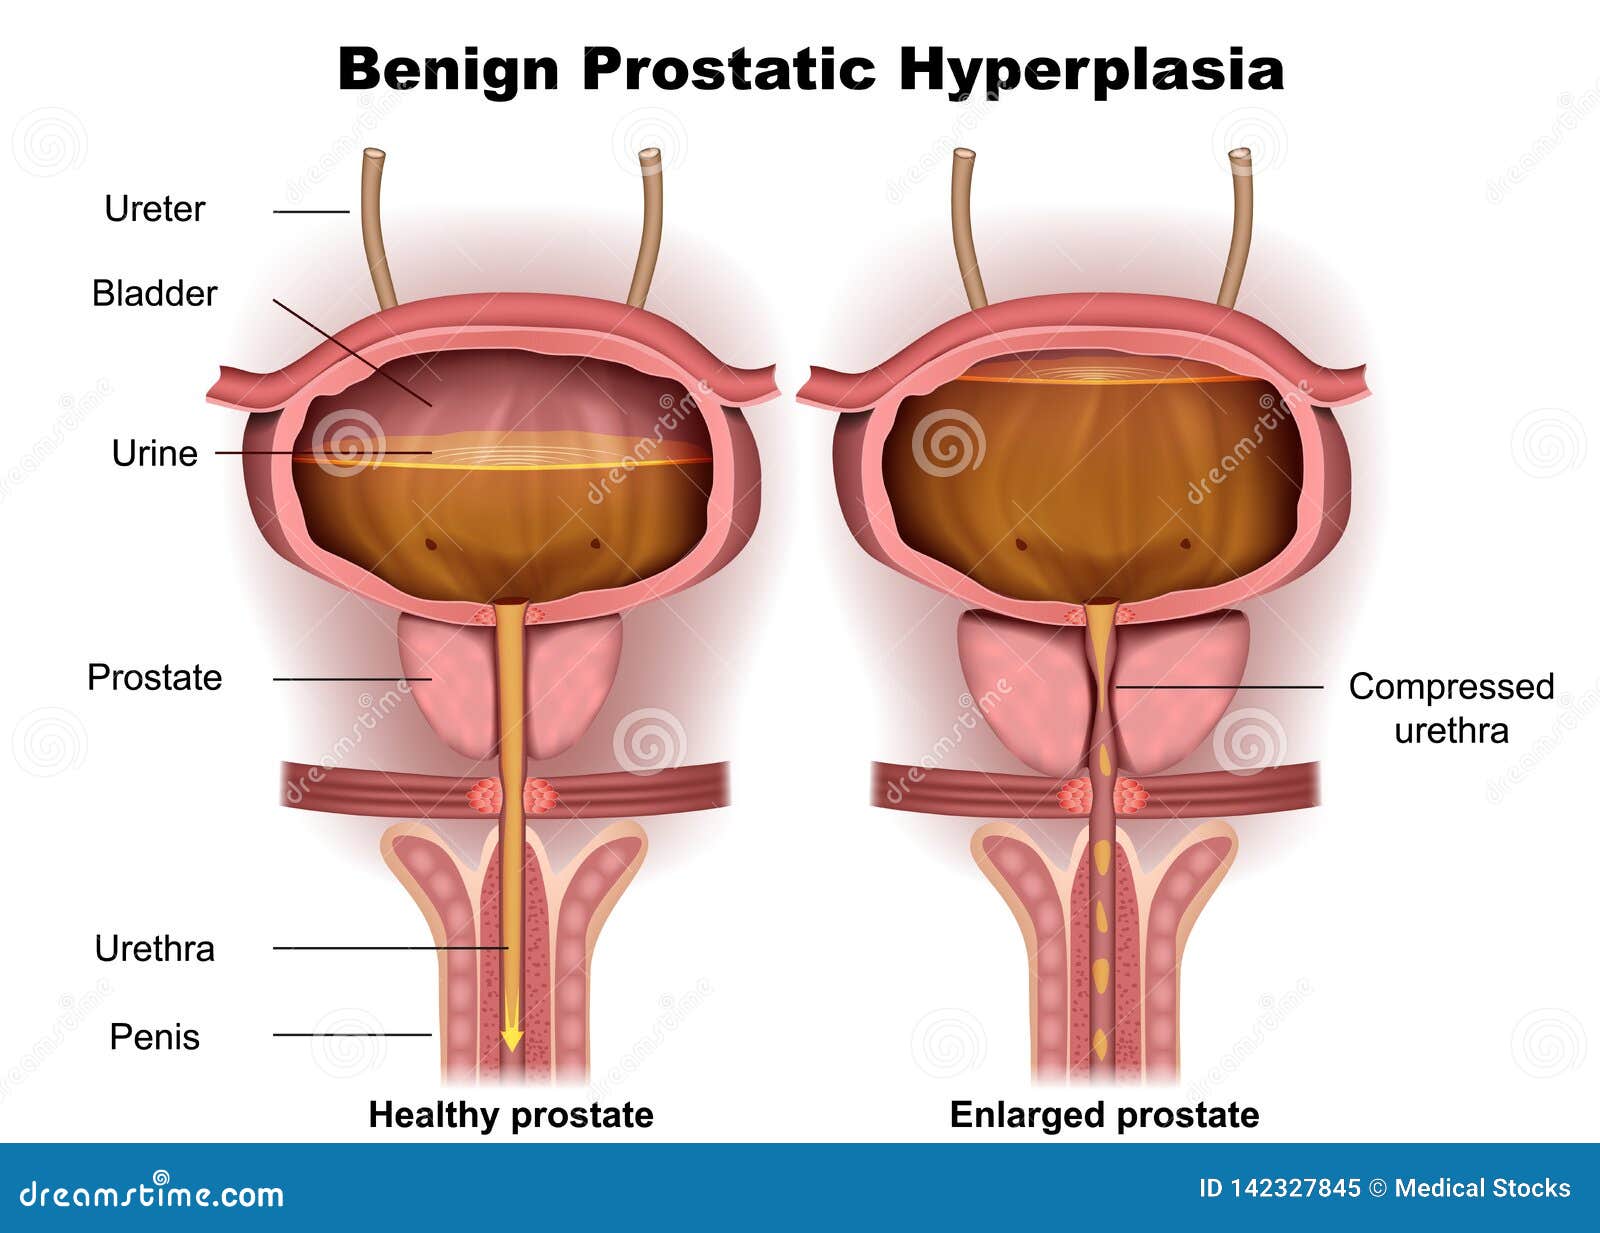 Fájl:Benign Prostatic Hyperplasia nci-vol-7137-300.jpg